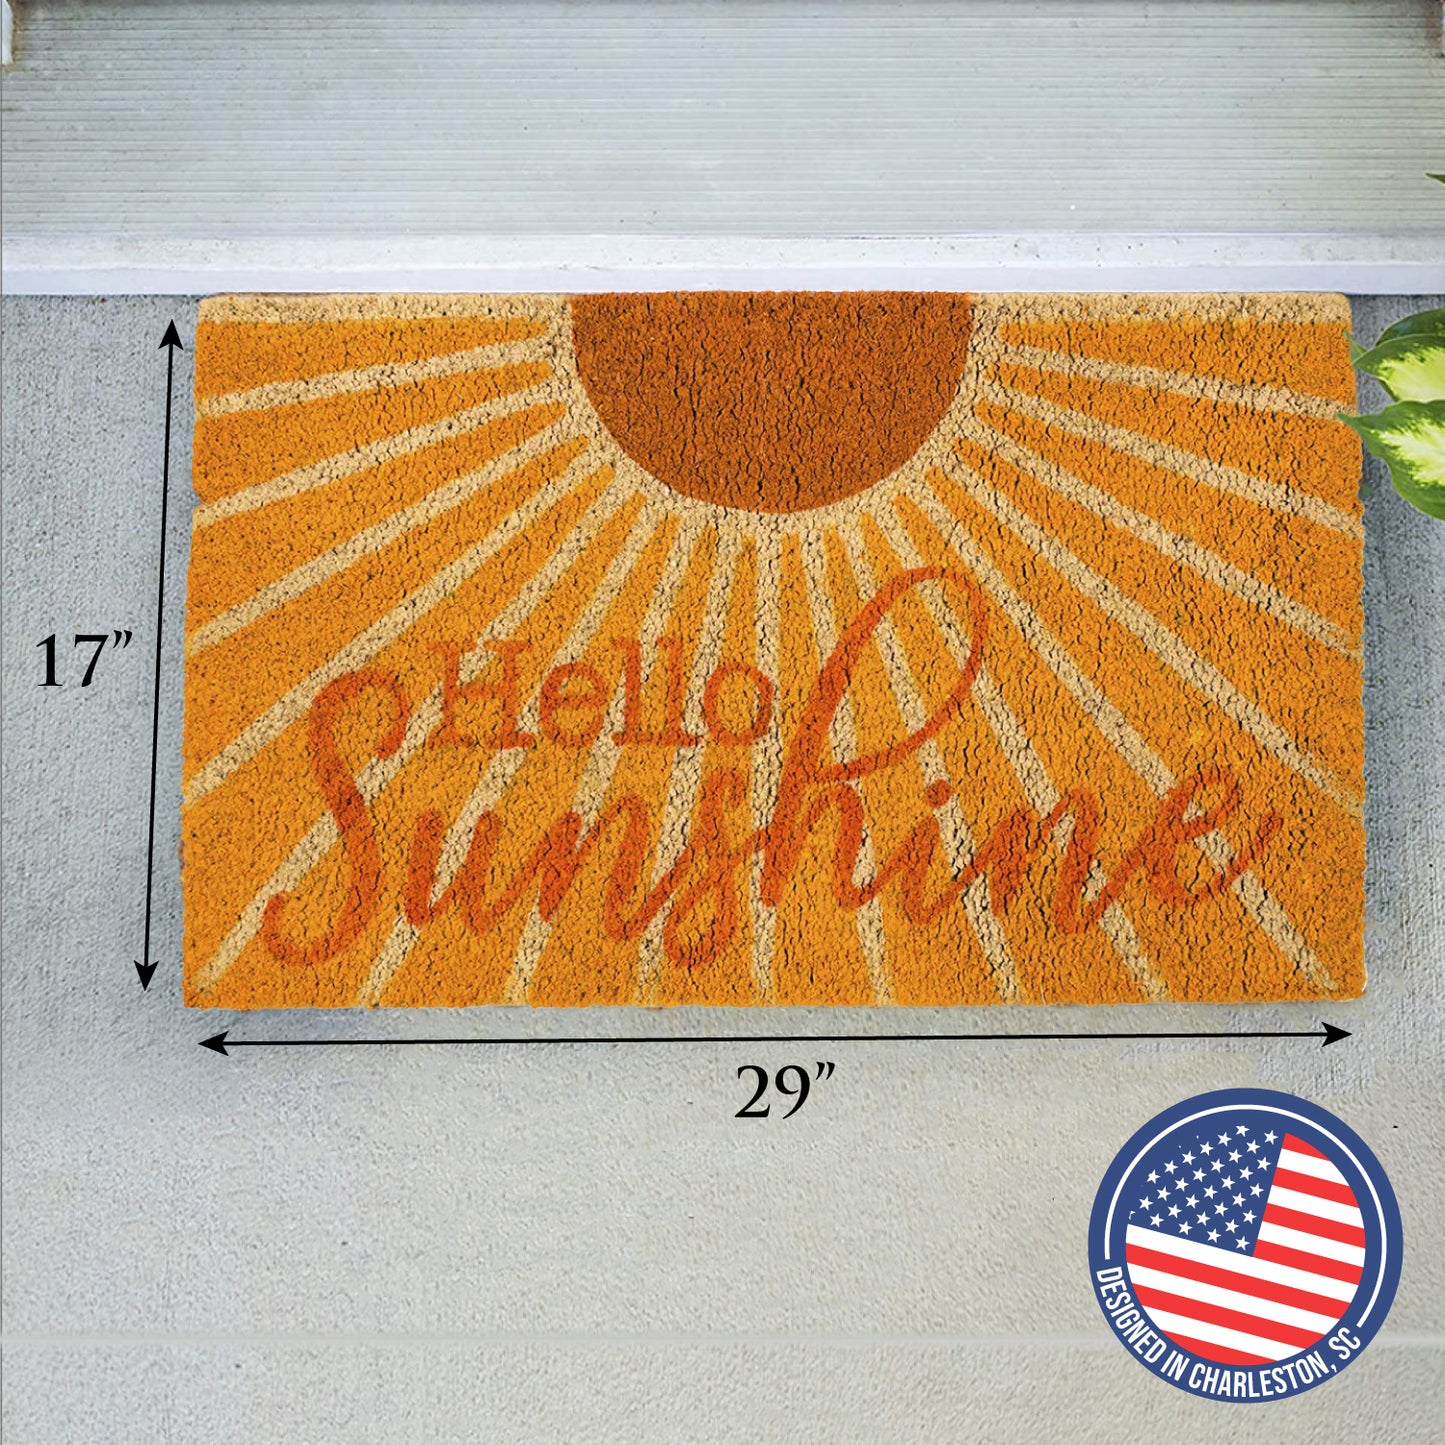 Avera Products "Hello Sunshine" Summer Time Fun Doormat